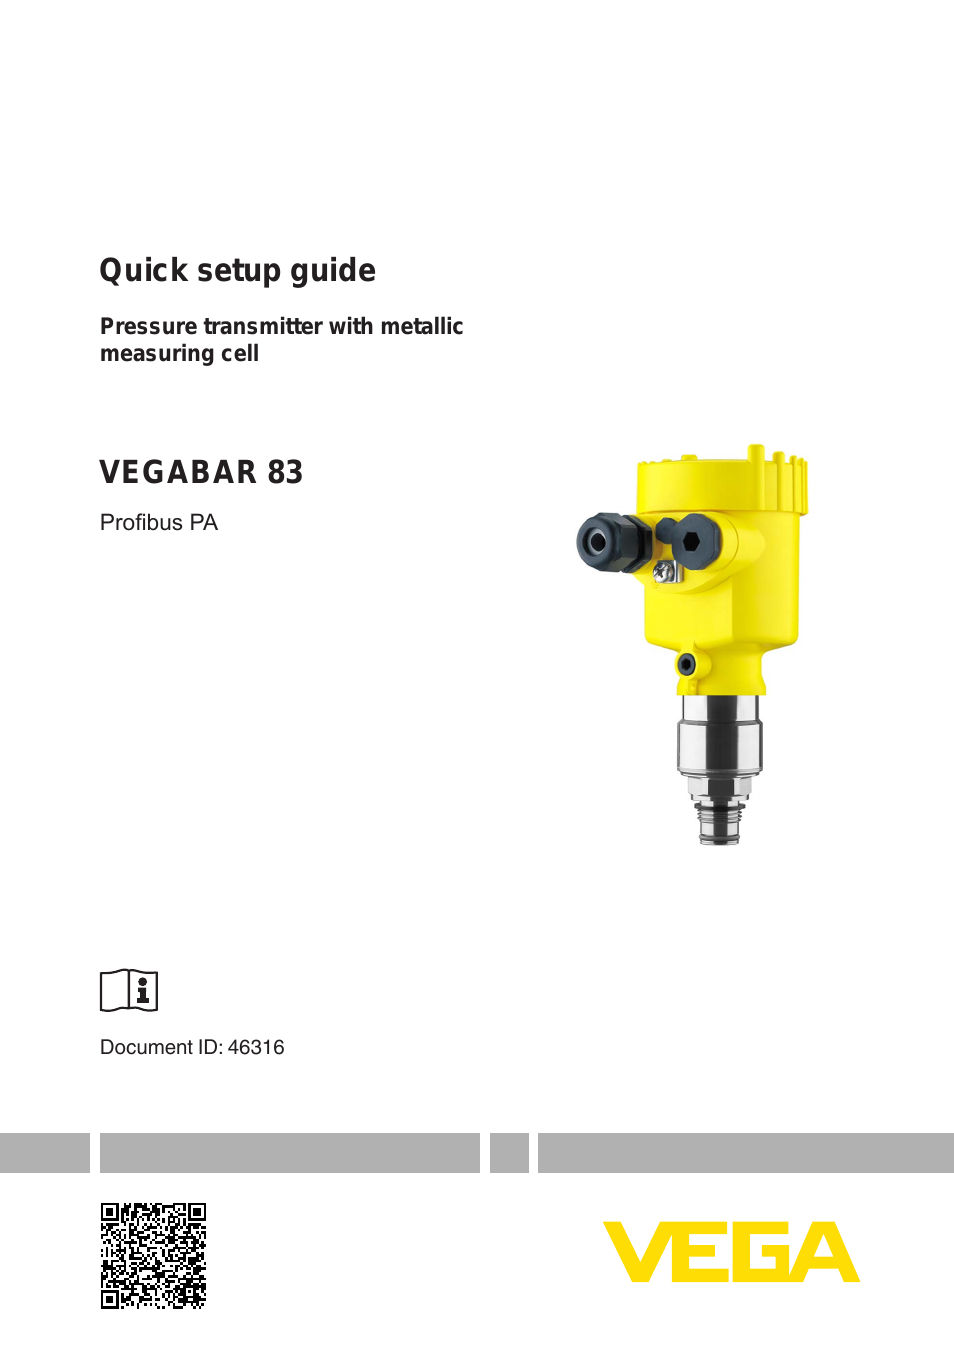 VEGABAR 83 Profibus PA - Quick setup guide